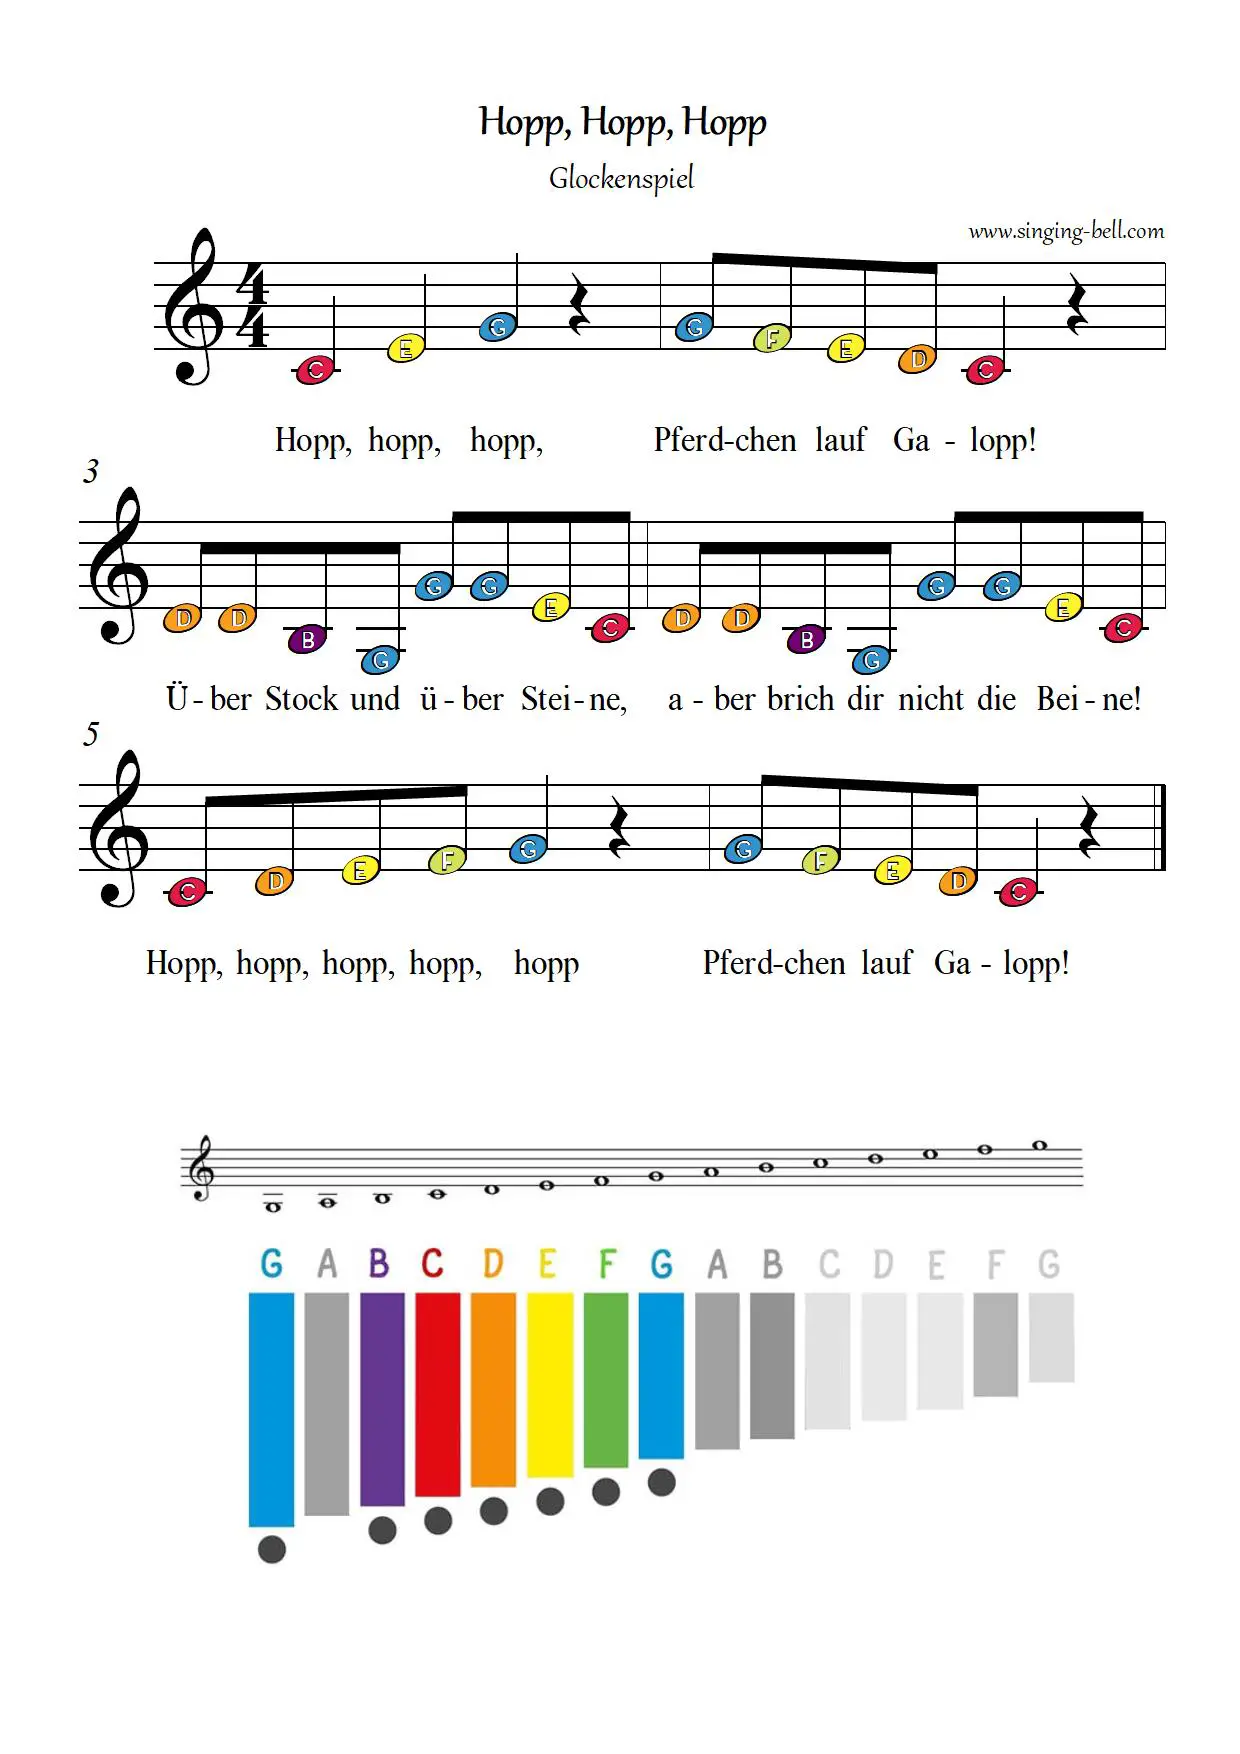 Hopp-hopp-hopp free xylophone glockenspiel sheet music color notes chart pdf